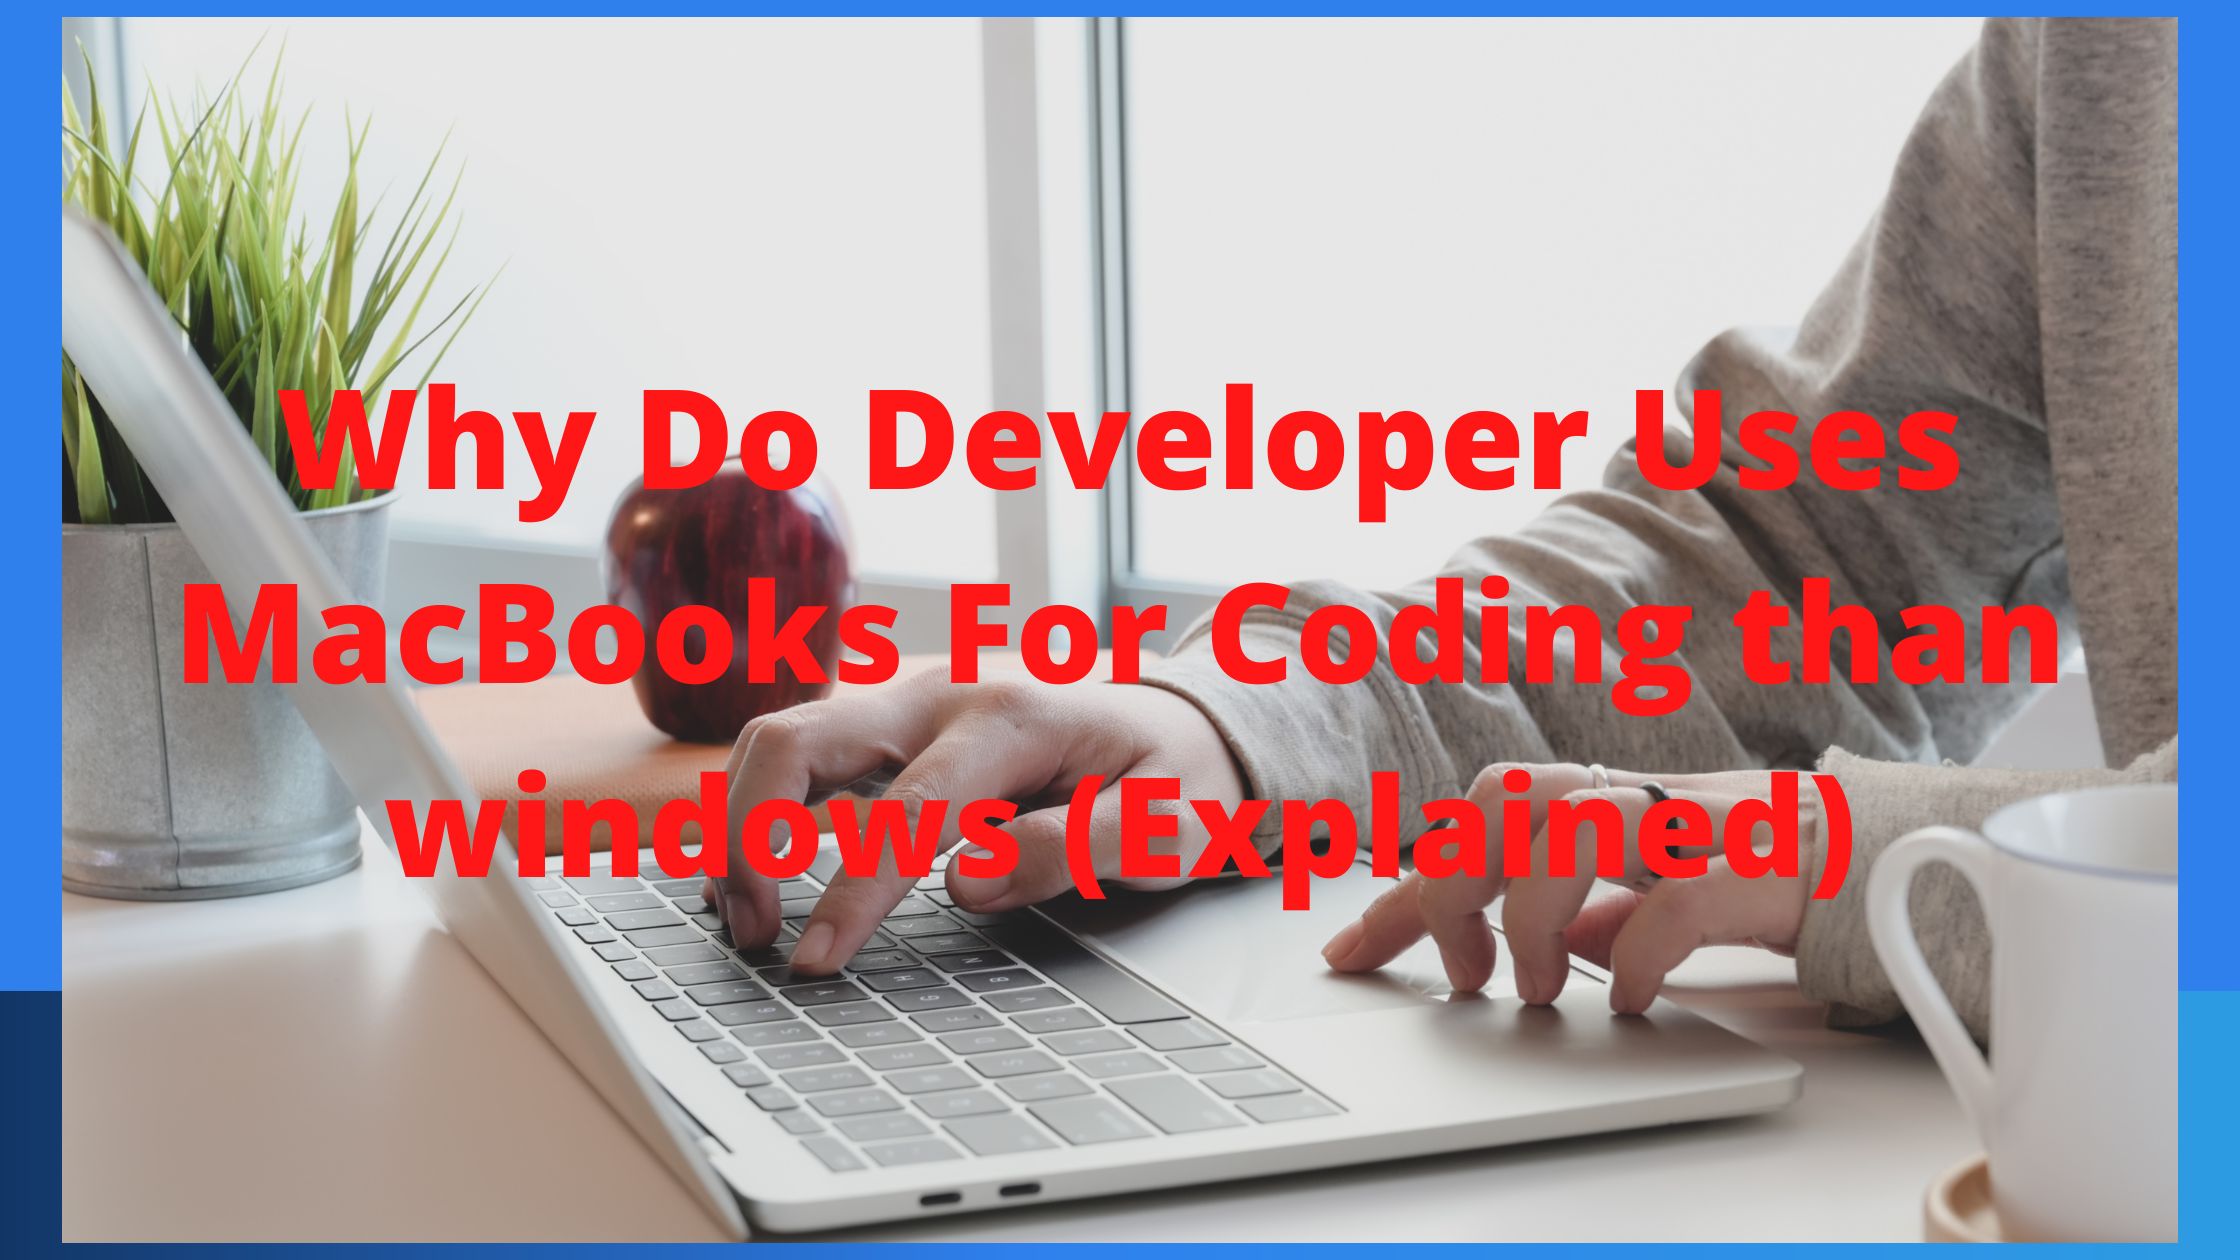 Why Do Developer Uses MacBooks For Coding than windows (Explained)